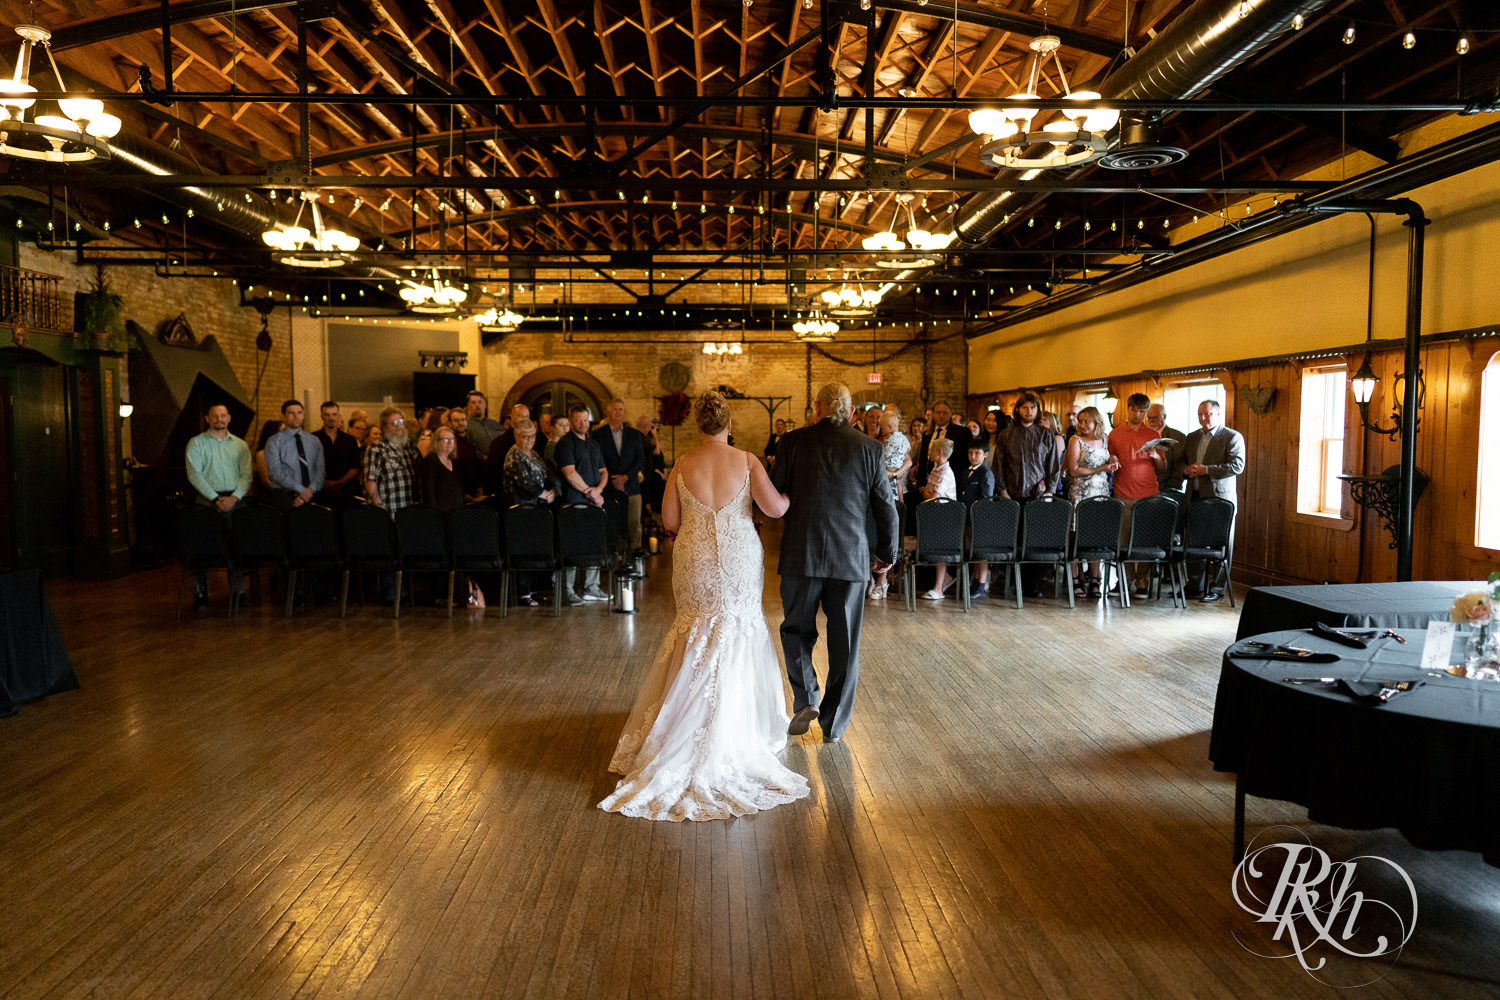 Bride walking down aisle at Kellerman's Event Center in White Bear Lake, Minnesota.